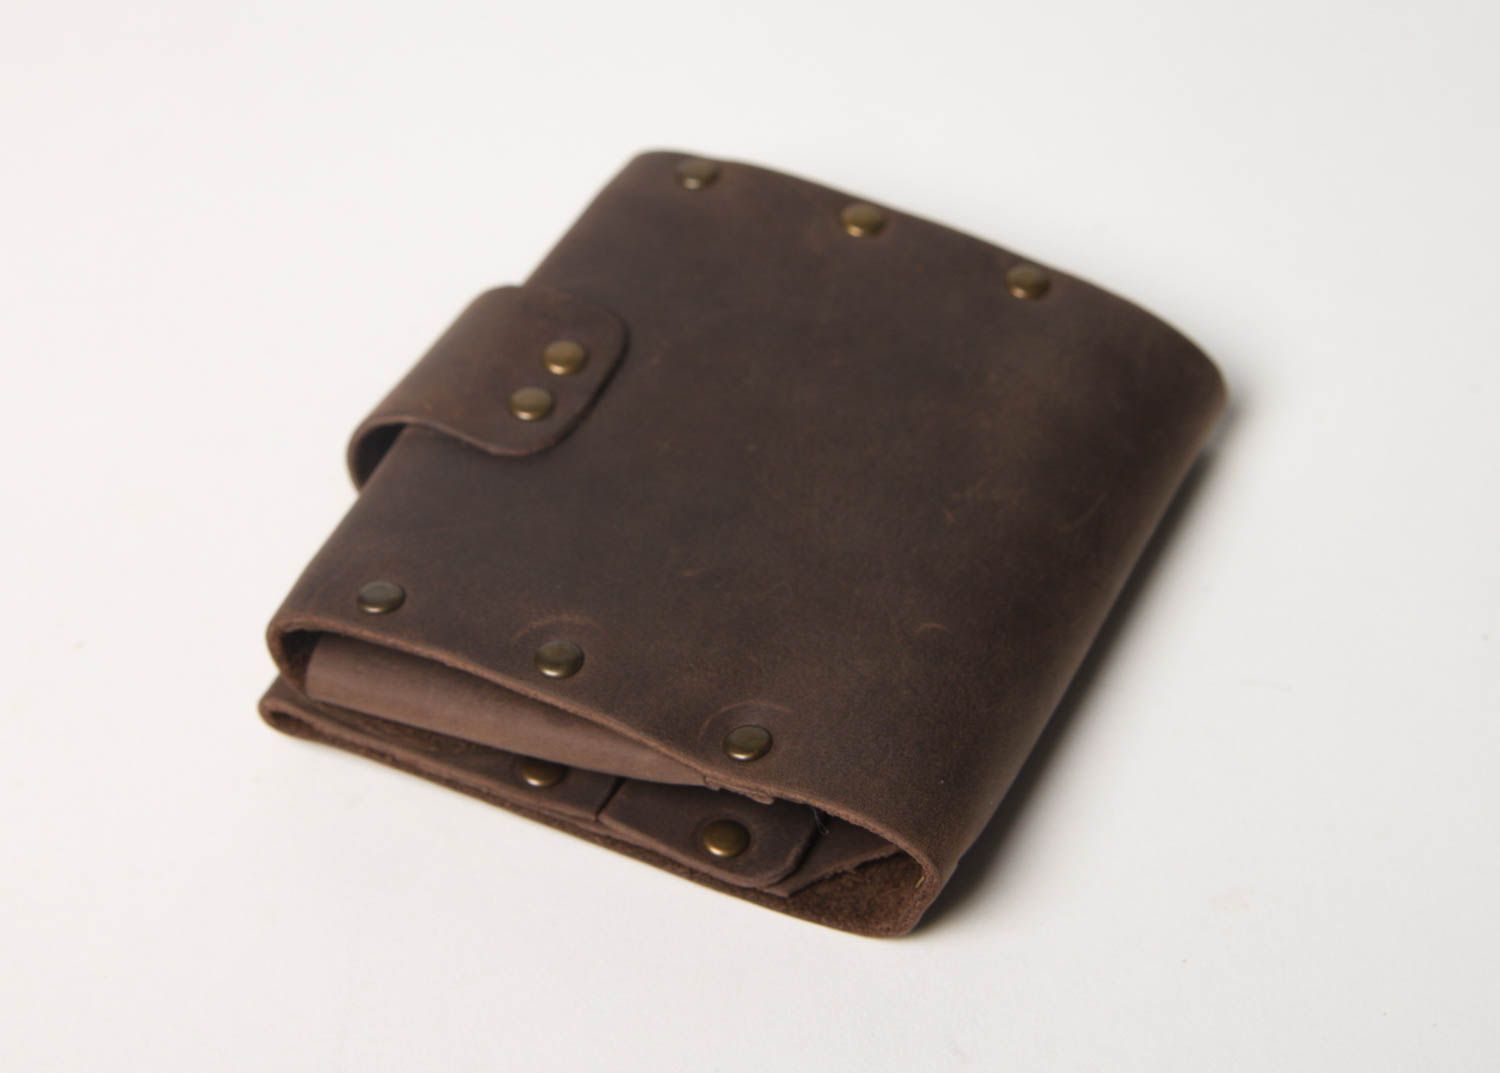 Stylish handmade leather purse designer accessories leather goods gift ideas photo 3